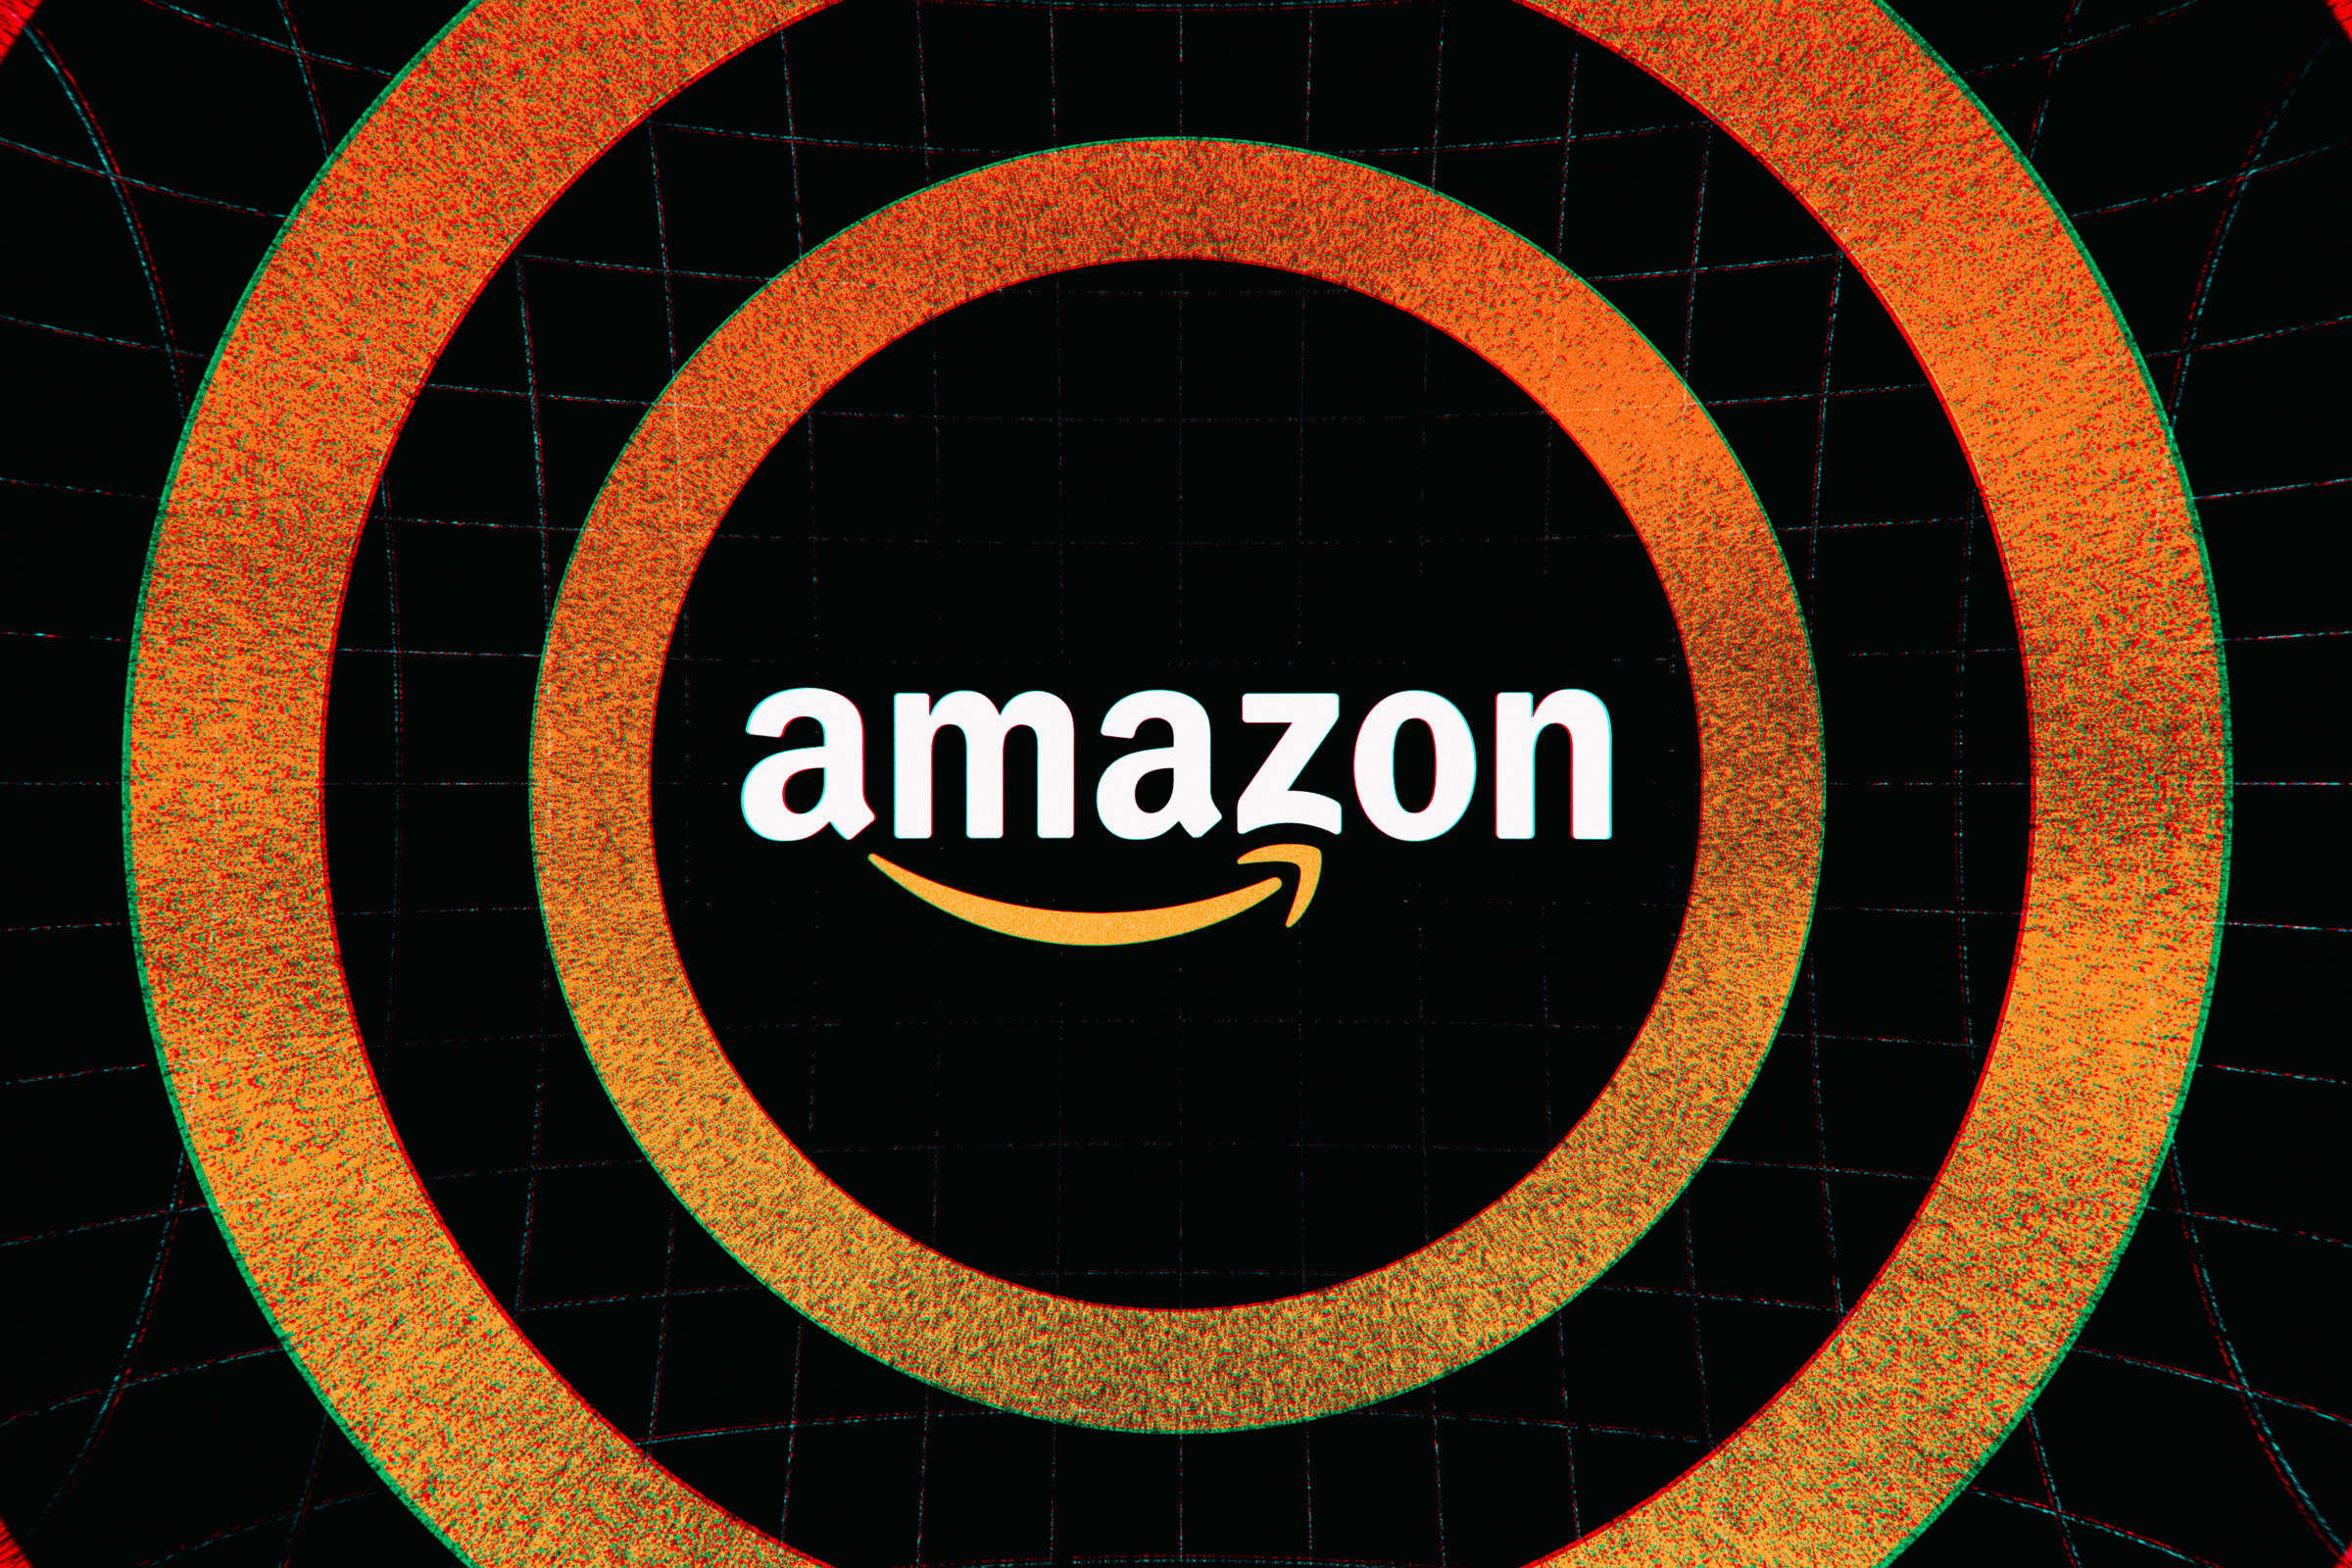 Illustration of Amazon’s wordmark in an orange and black bull’s-eye.